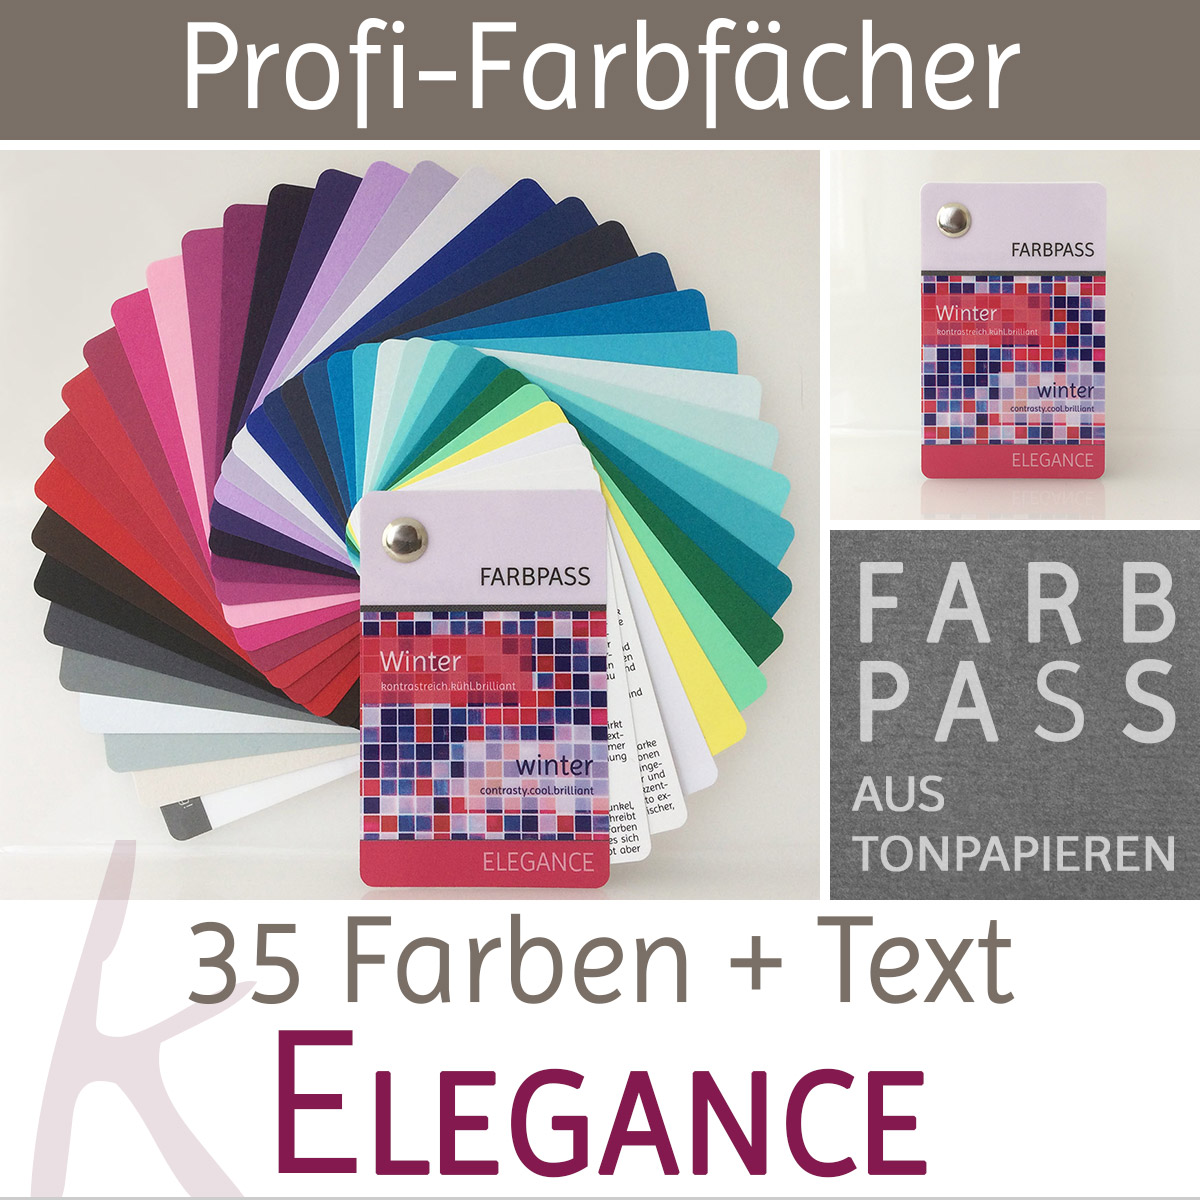 Farbpass Wintertyp - Elegance | Komood